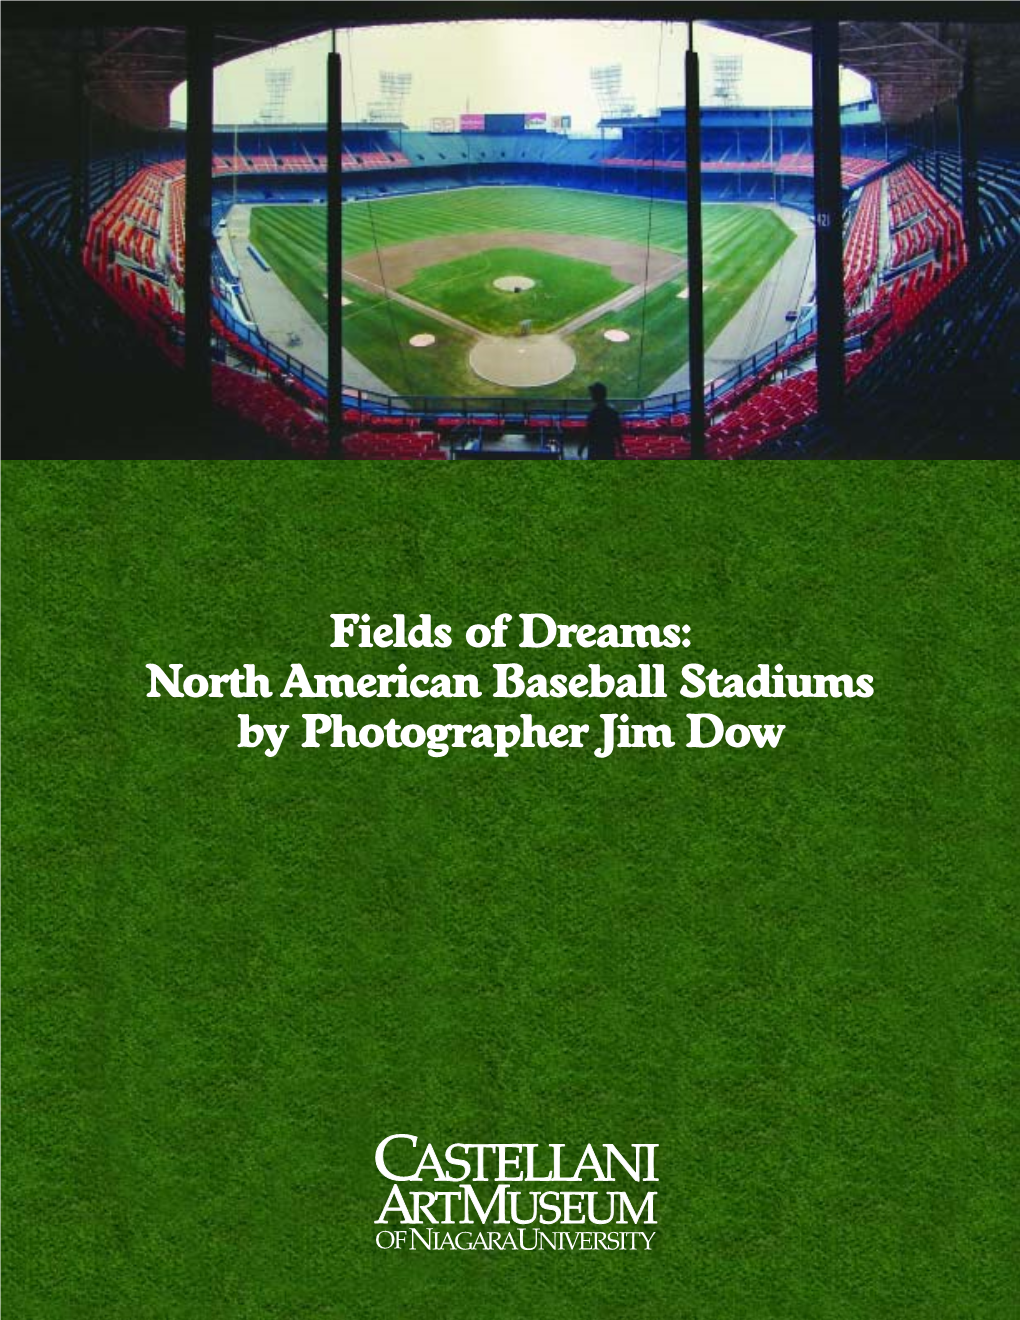 North American Baseball Stadiums by Photographer Jim Dow